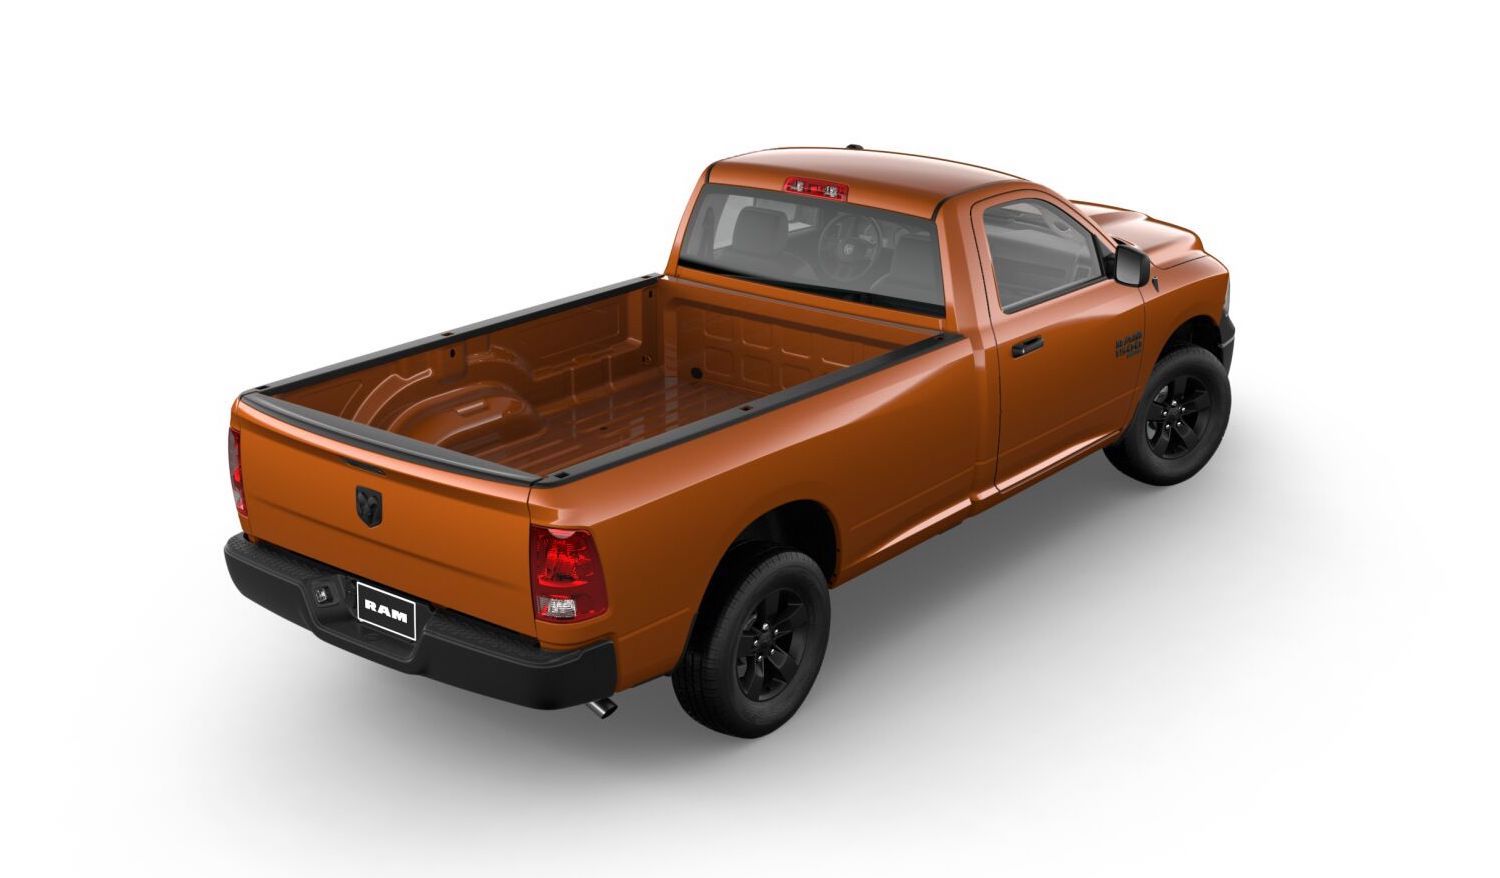 Promo render of an orange Ram 1500 pickup truck.